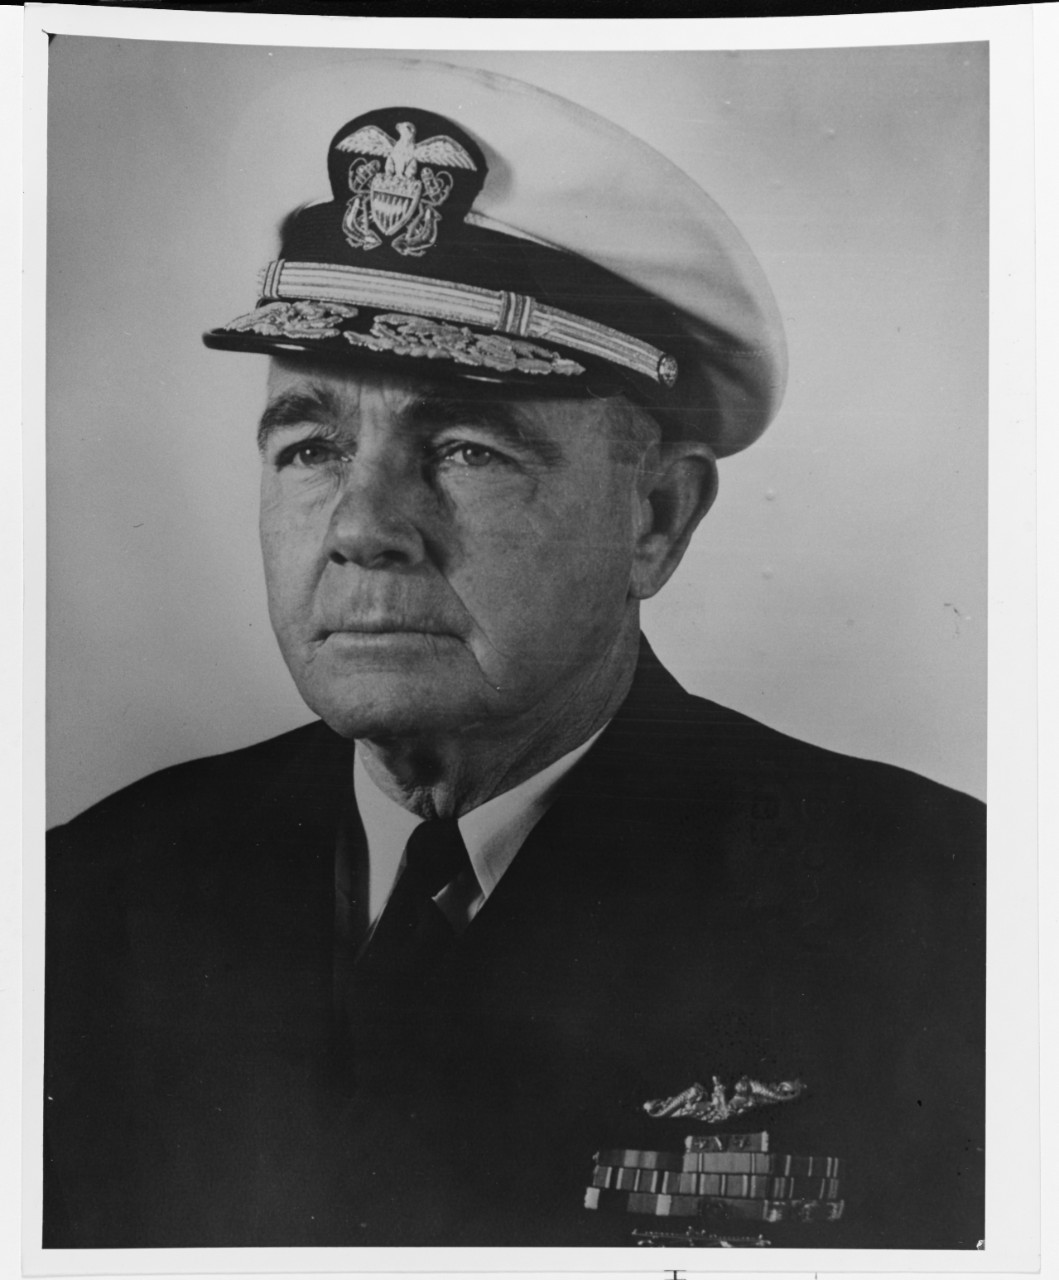 Commander Herber H. McLean, USN